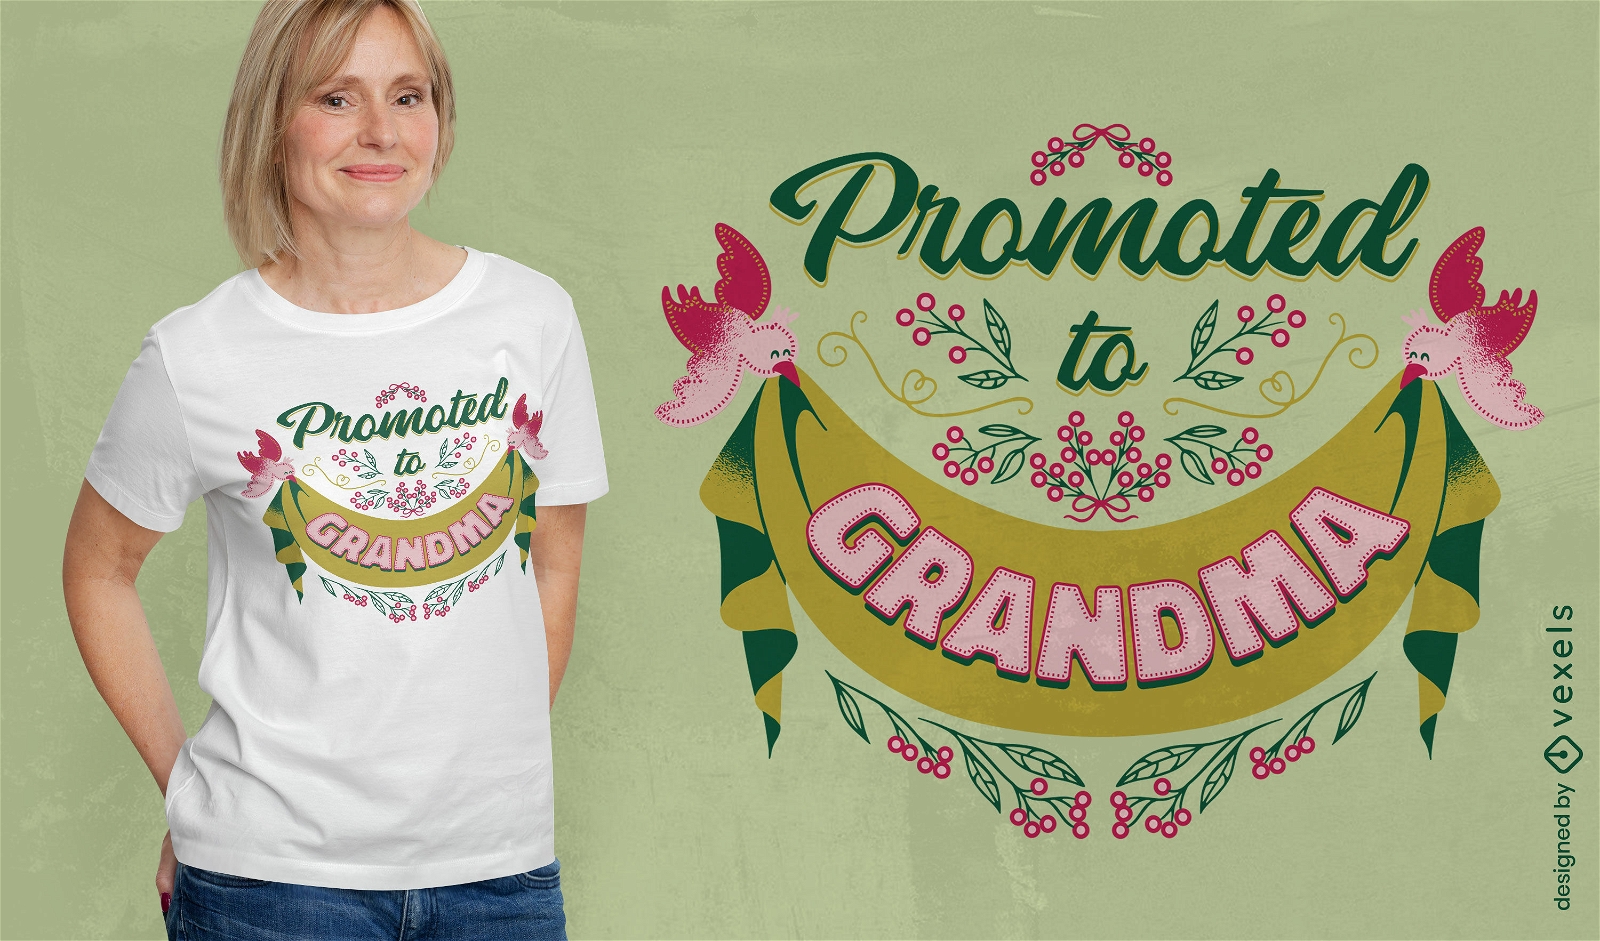 Promoted to grandma t-shirt design